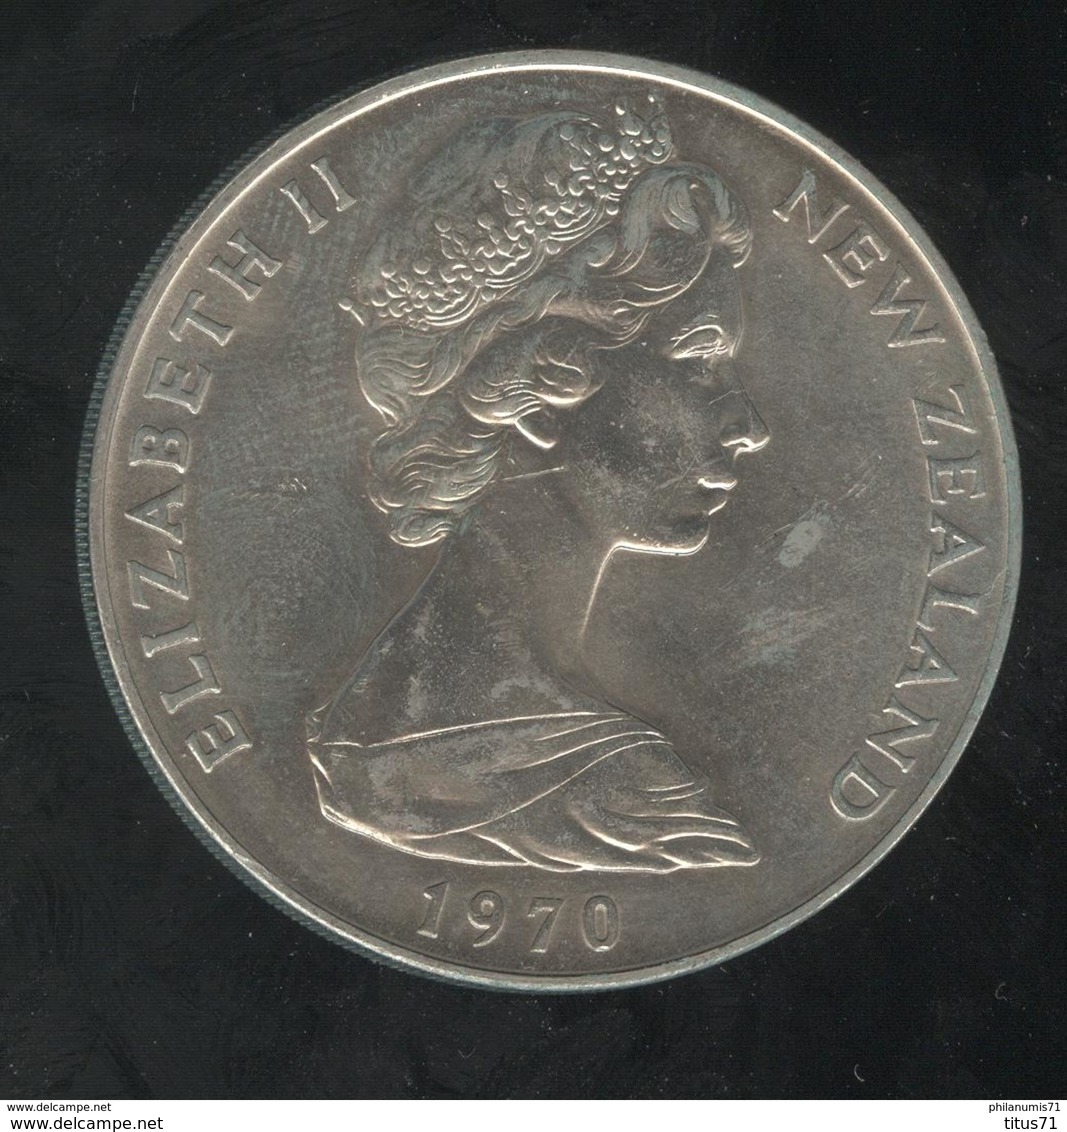 1 Dollar Nouvelle Zélande / New Zealand - CC Visite Royale 1970 - Neuseeland